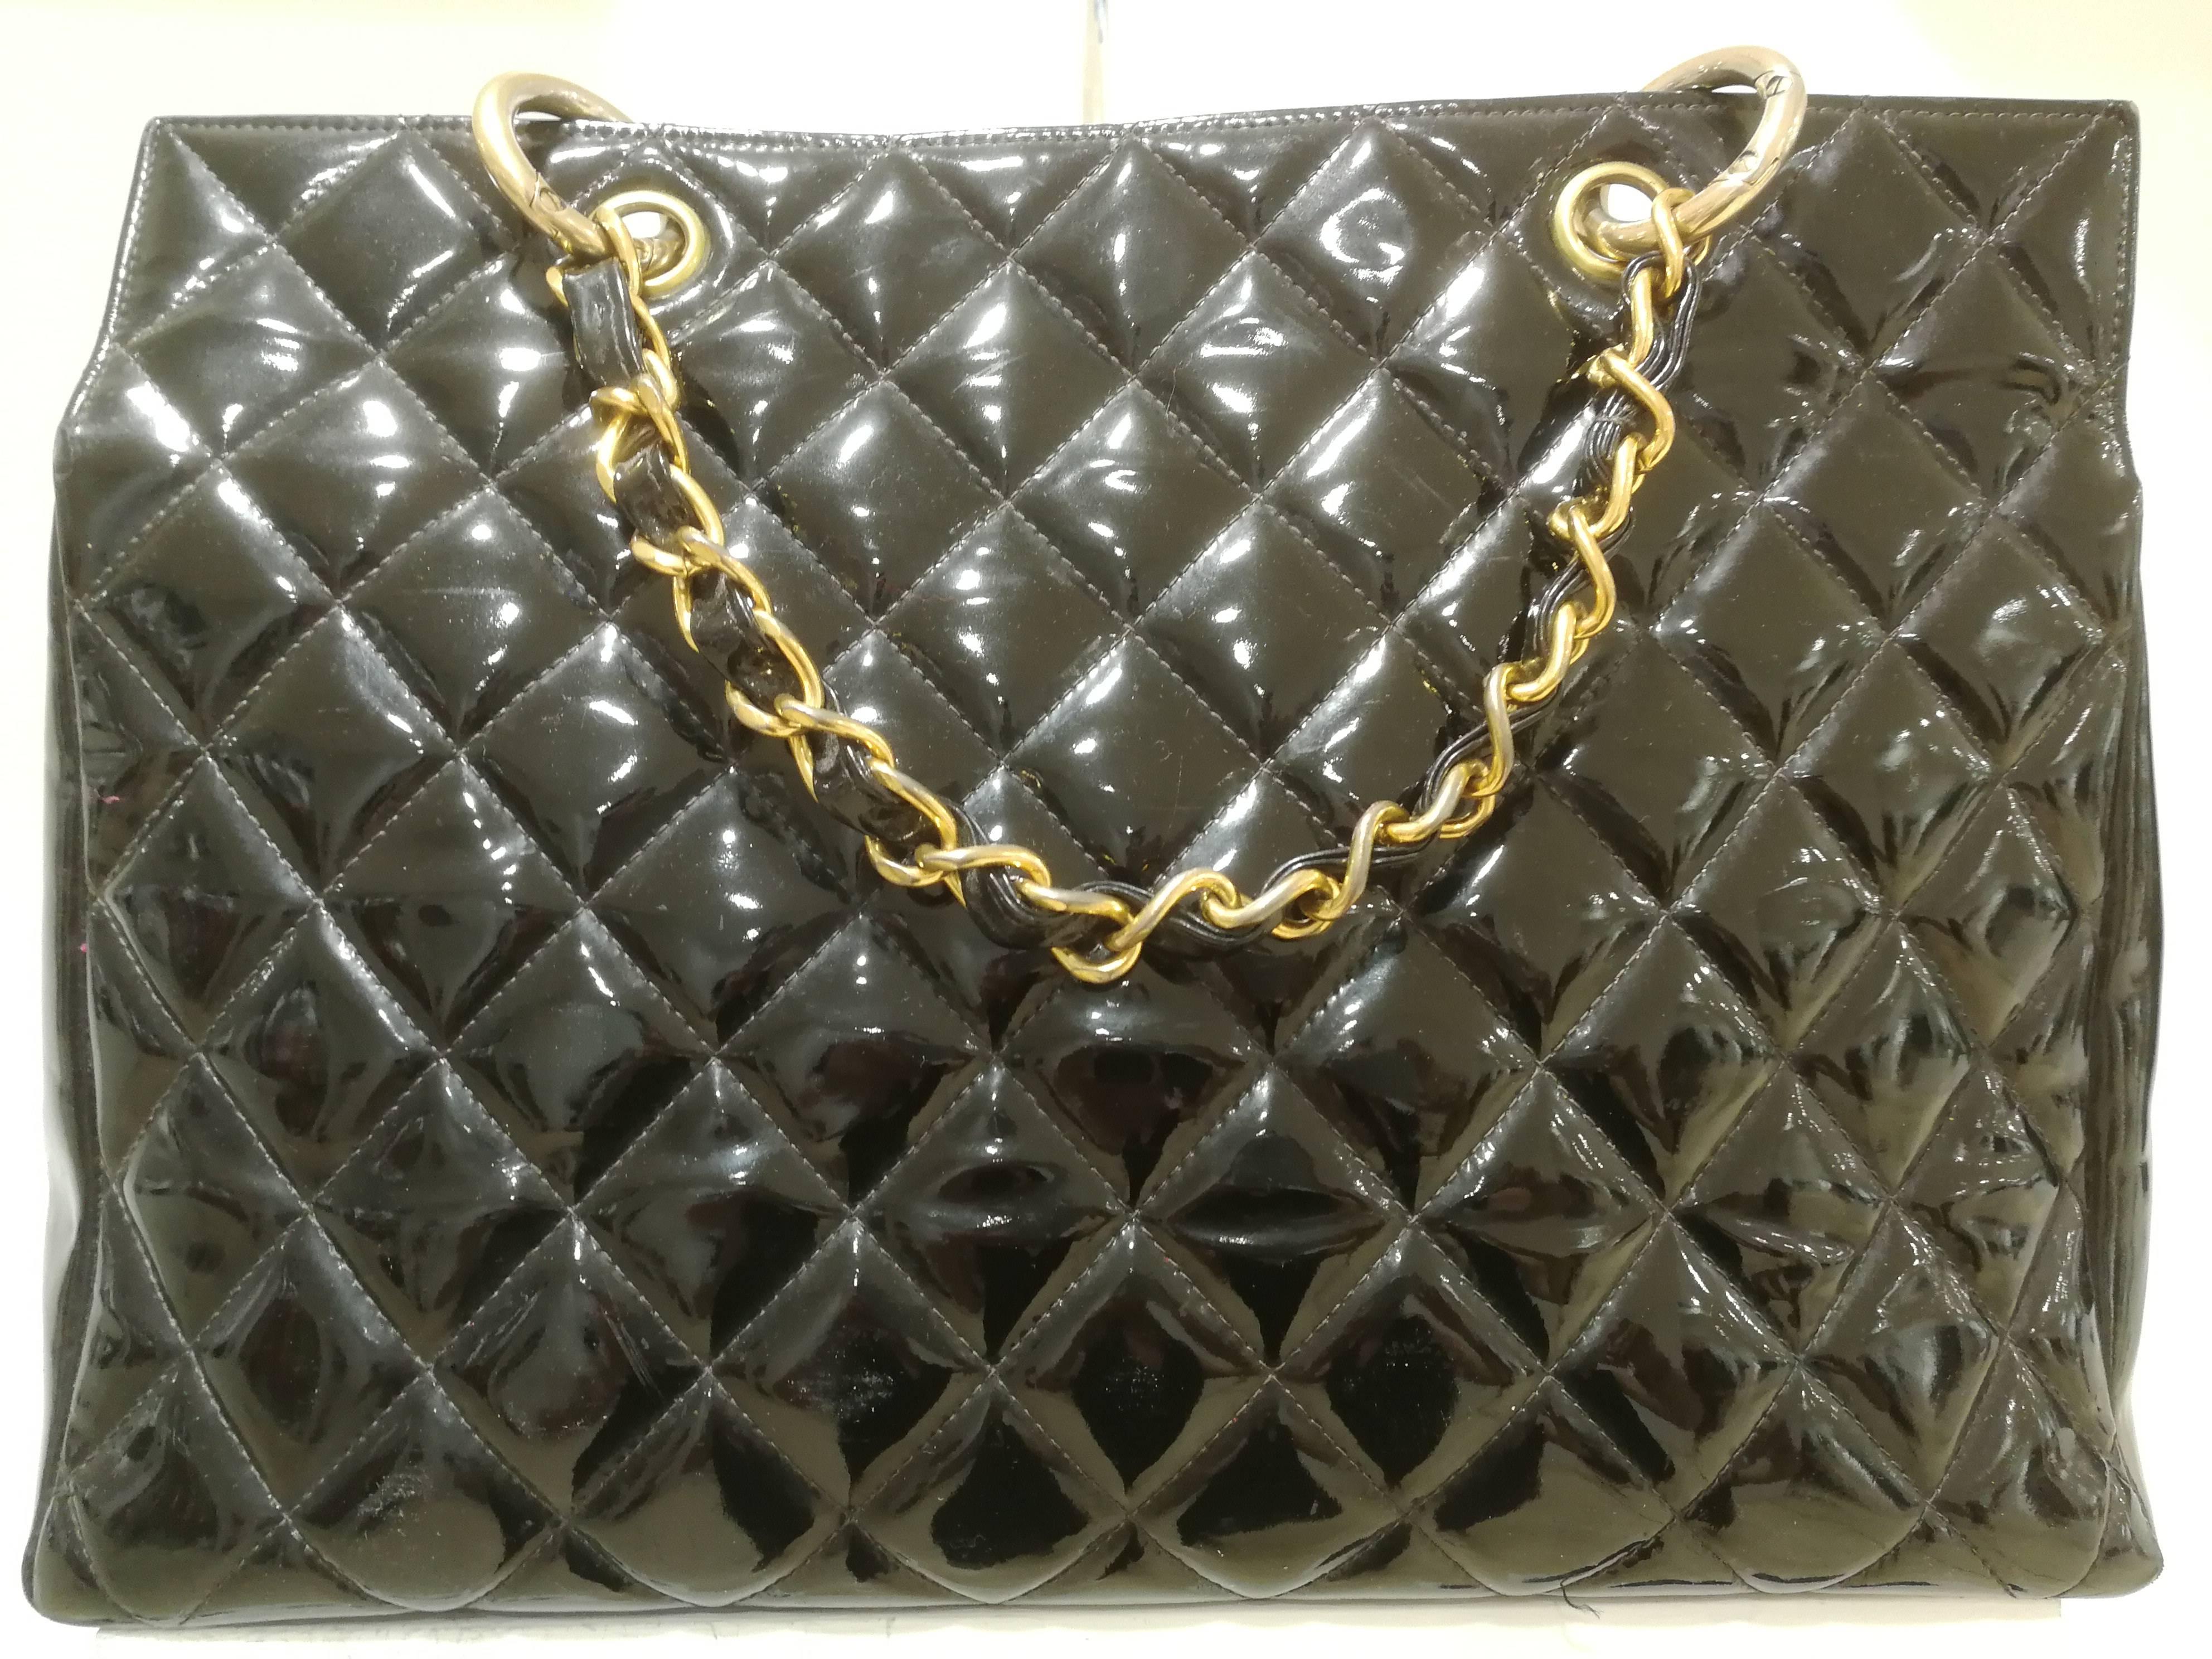 Chanel black patent leather gold hardware bag 1